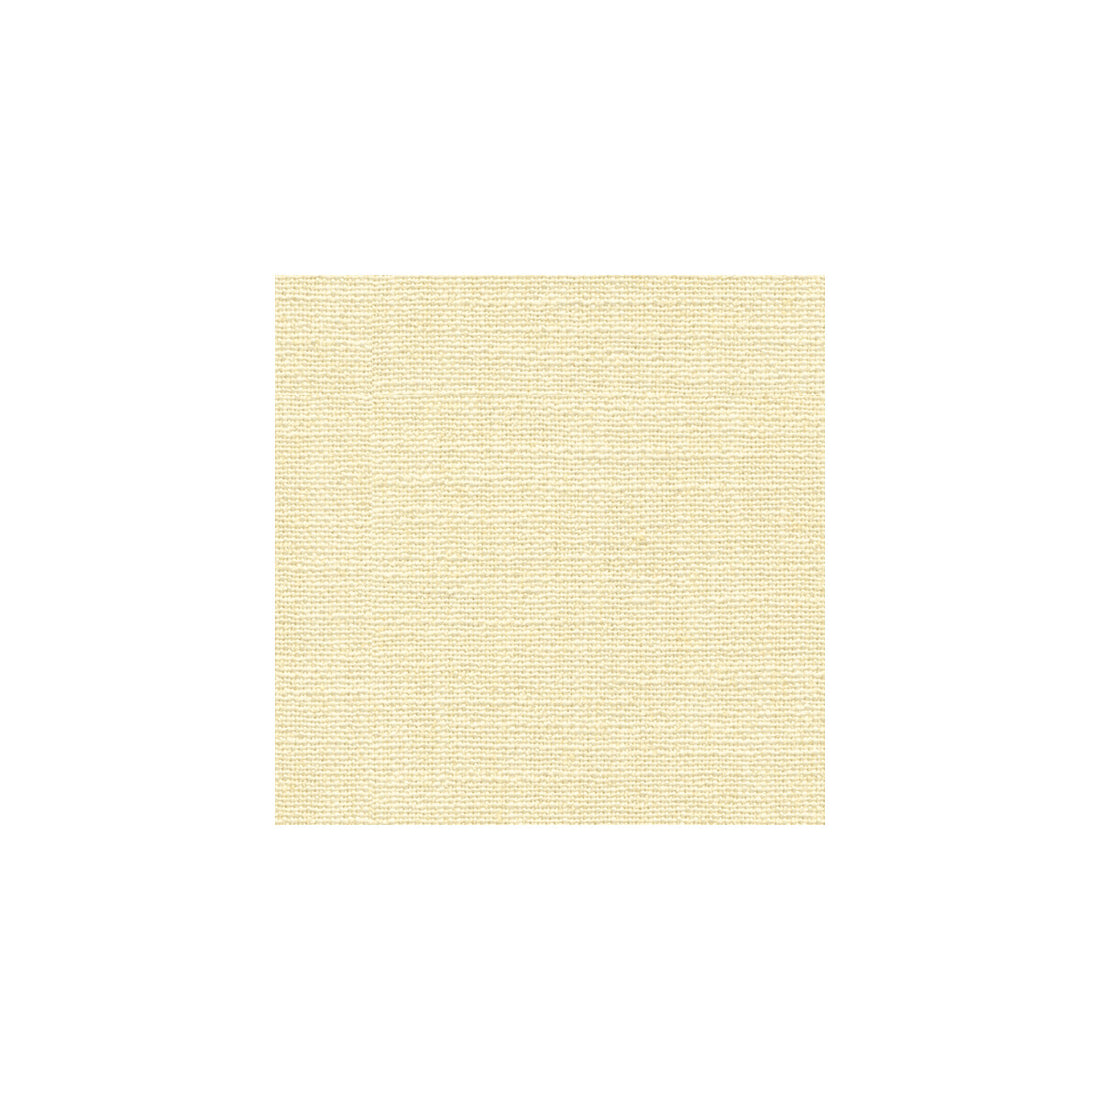 Kravet Smart fabric in 33140-1 color - pattern 33140.1.0 - by Kravet Smart in the Sarah Richardson Affinity collection